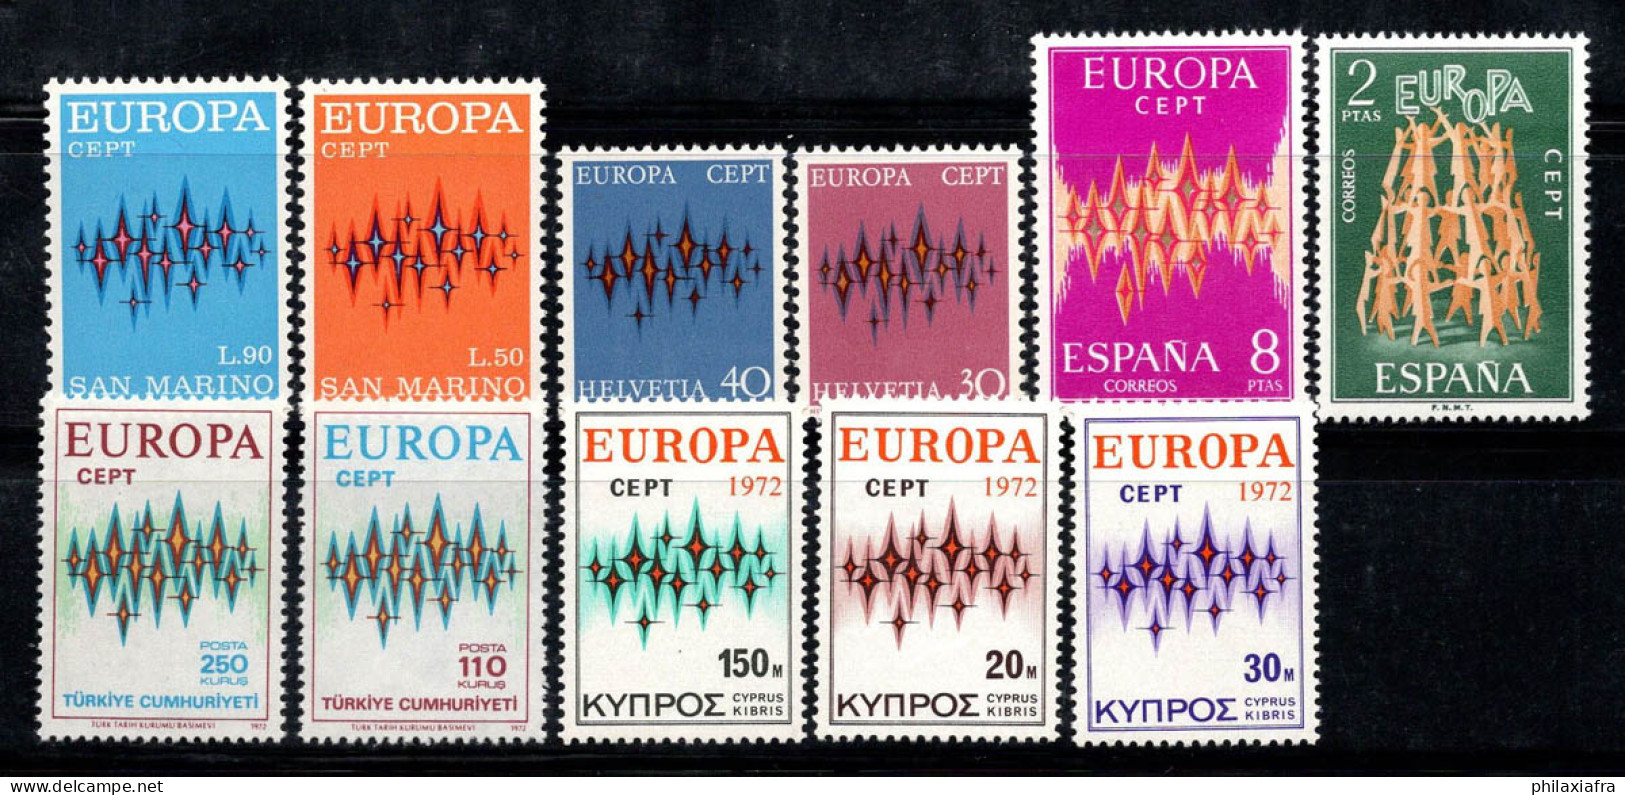 Europe CEPT 1972 Neuf ** 100% Cirpo, Espagne - 1972